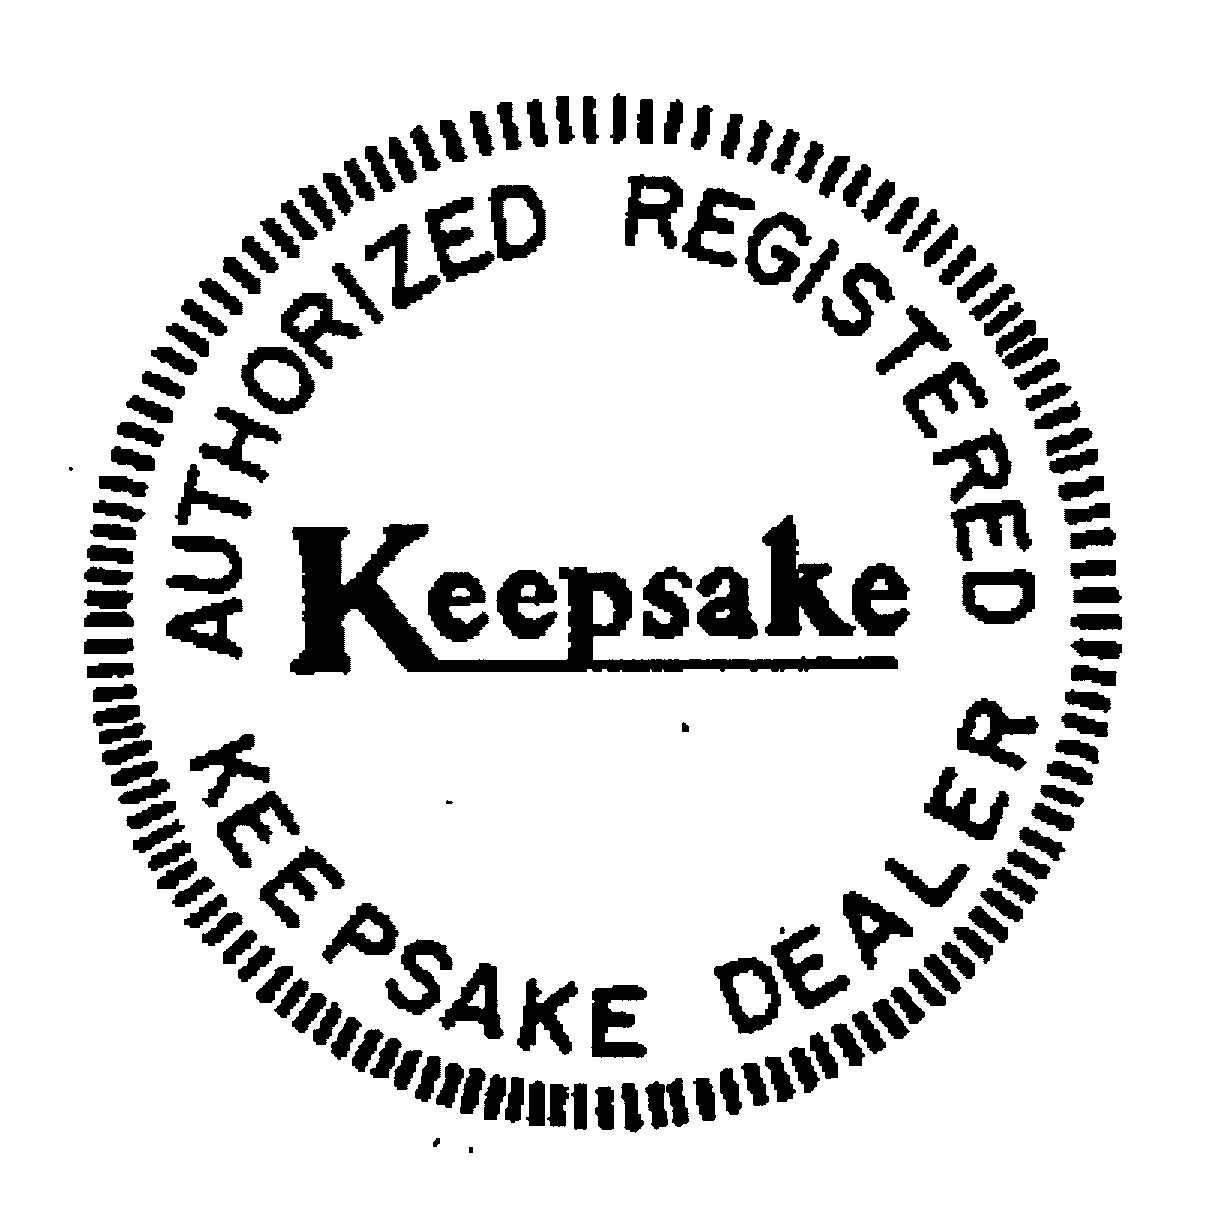  KEEPSAKE AUTHORIZED REGISTERED KEEPSAKE DEALER.